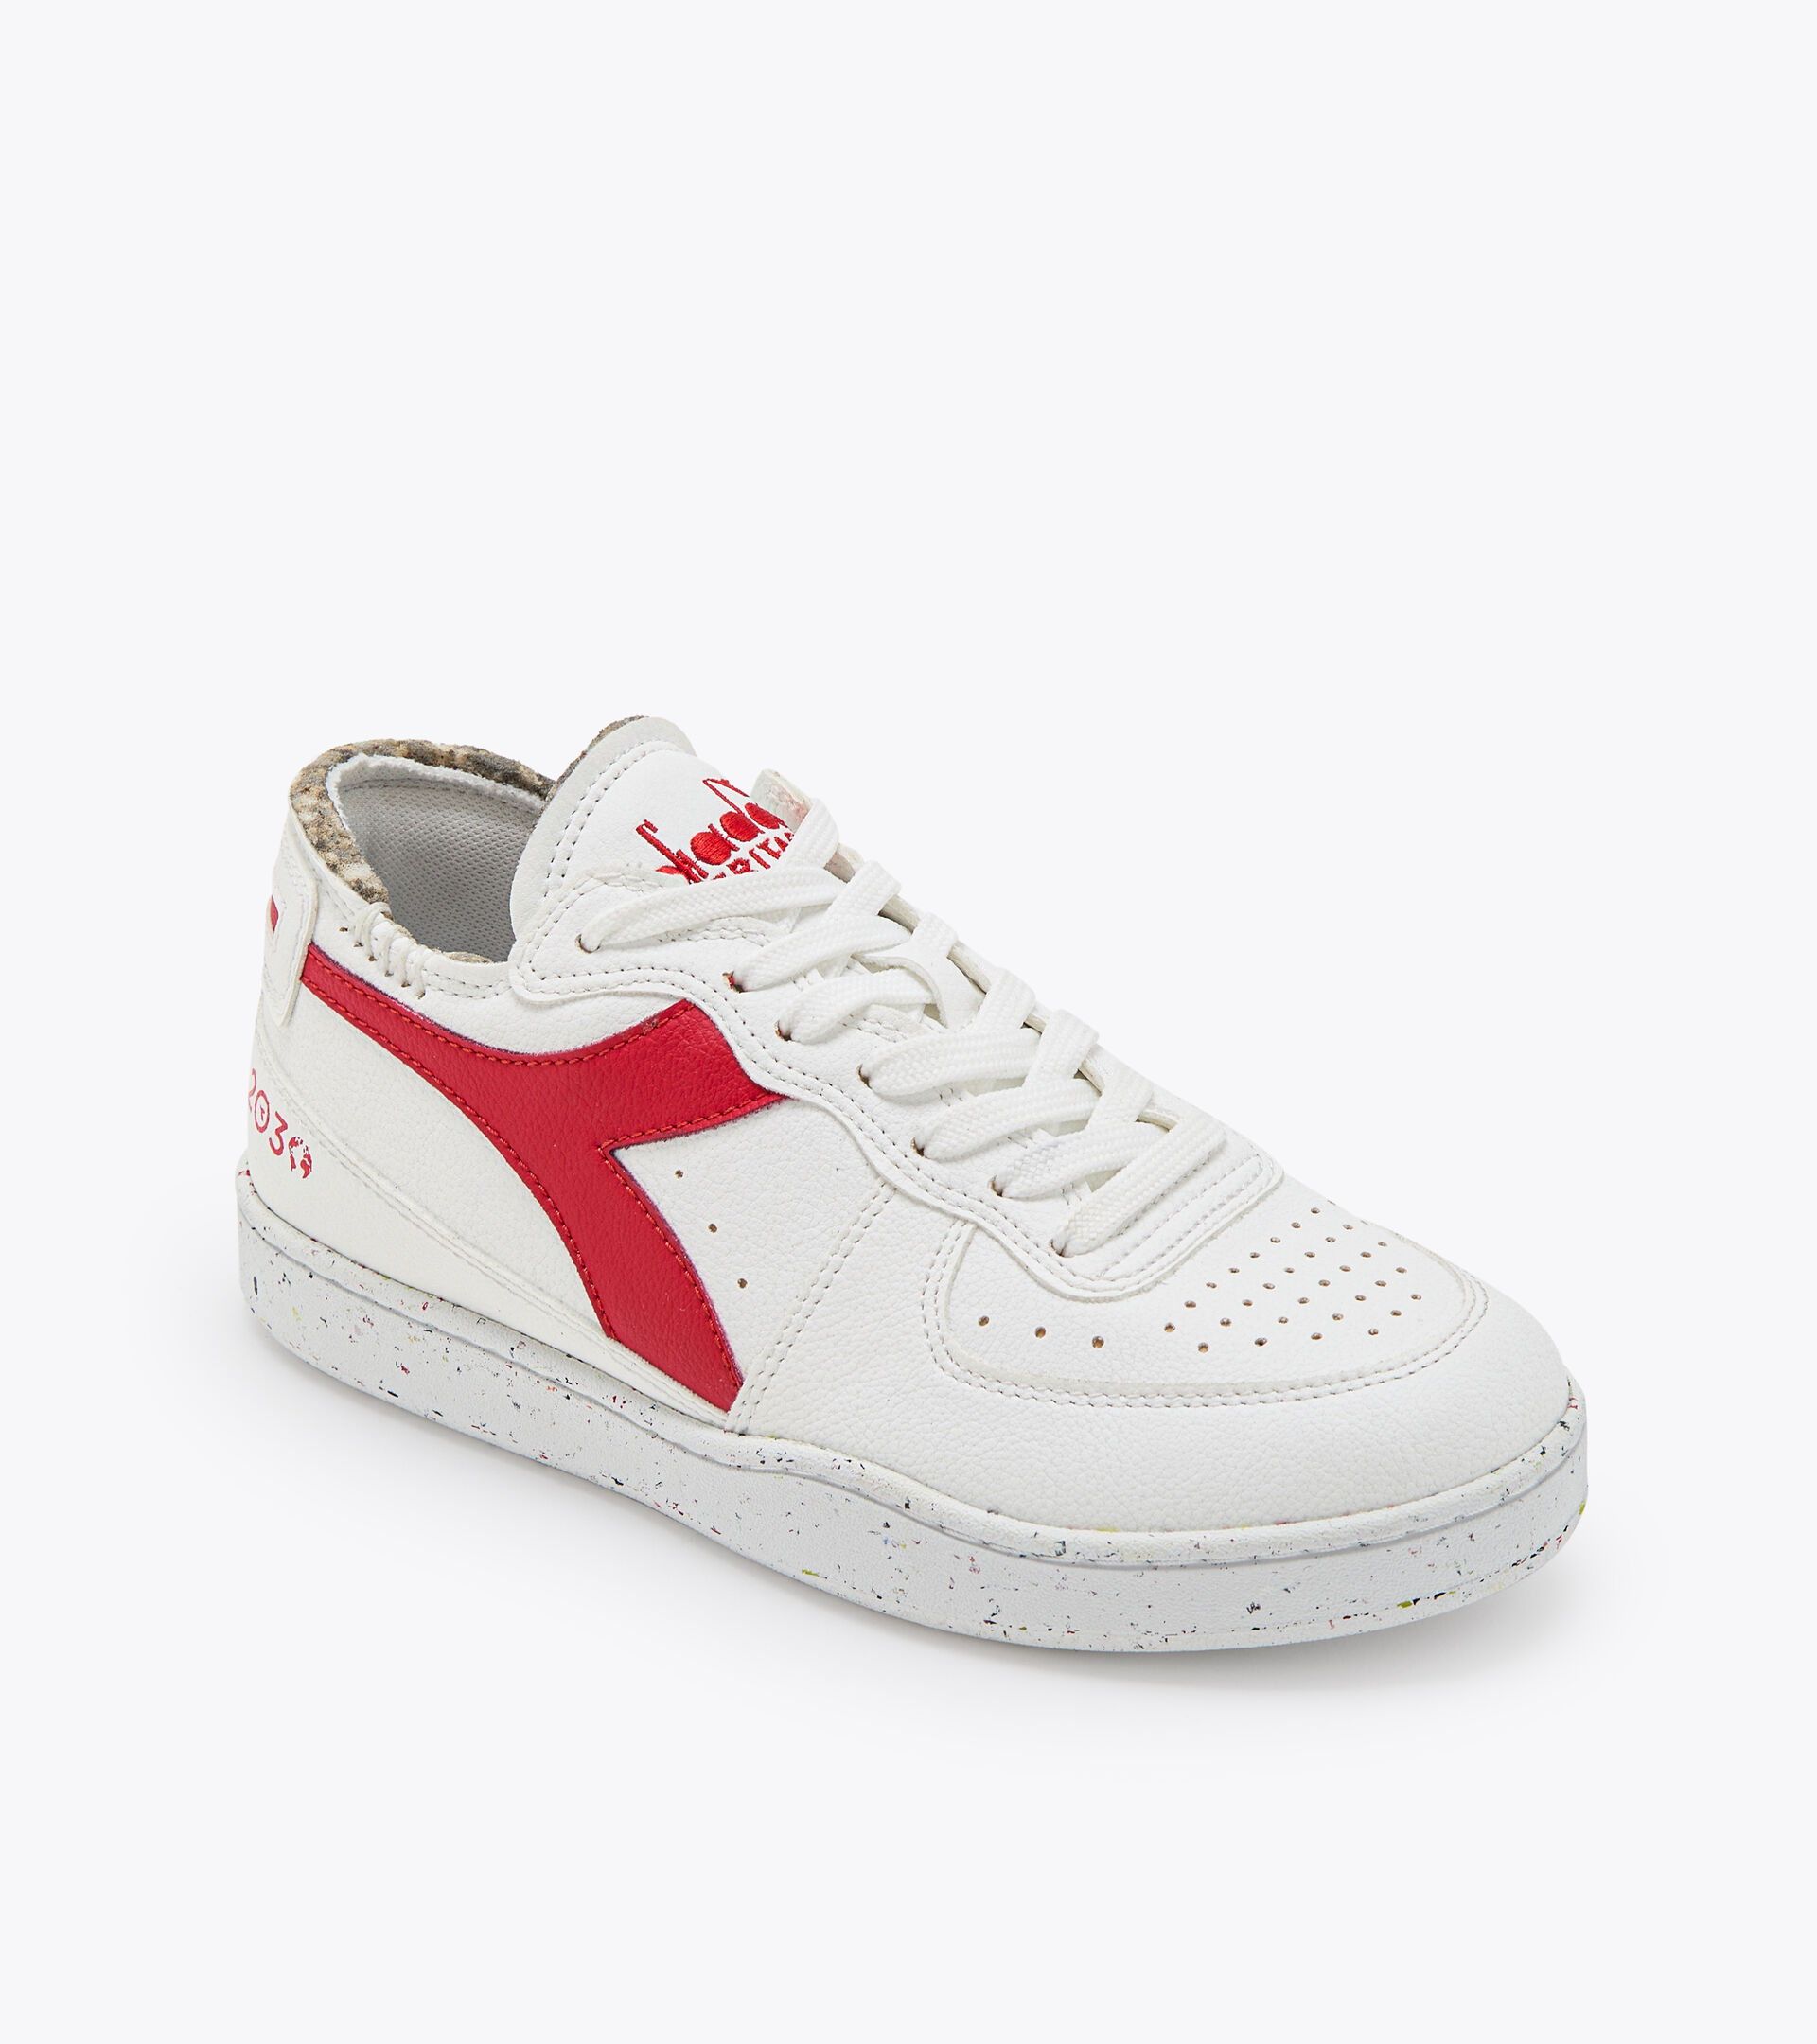 Heritage shoe - Unisex MI BASKET ROW CUT 2030 WHITE/FERRARI RED ITALY - Diadora